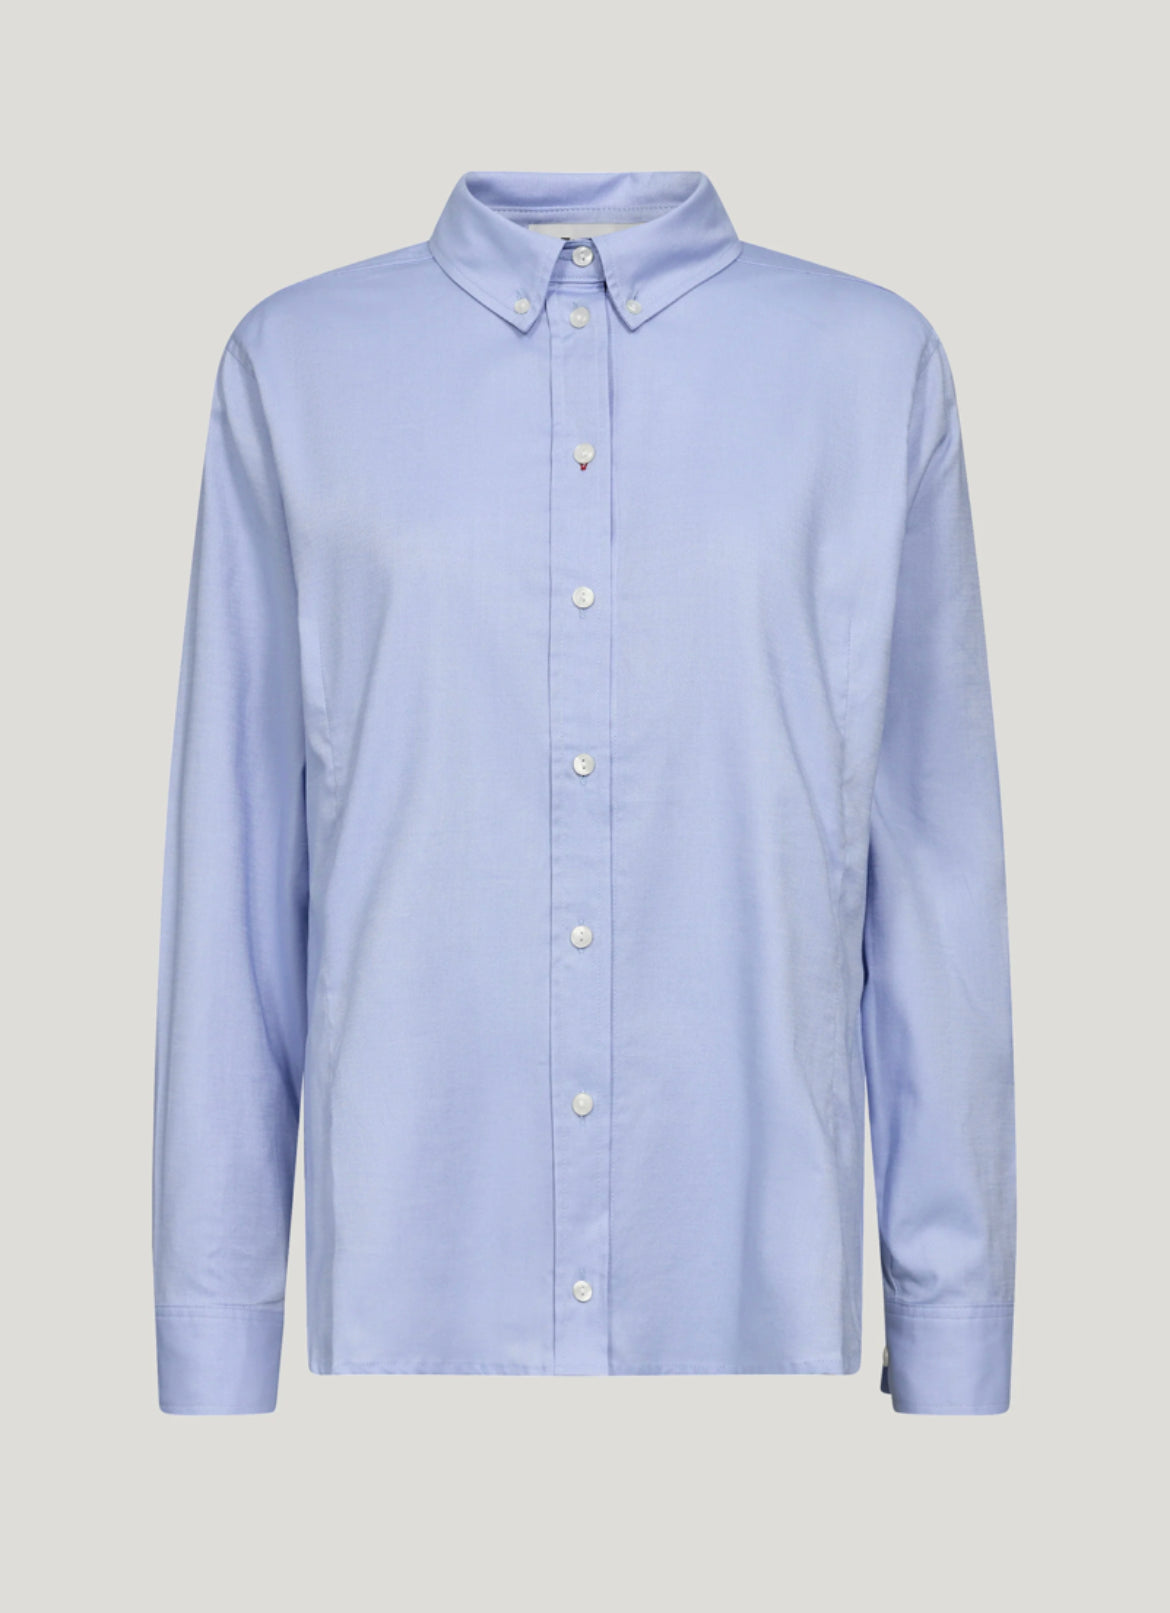 TRW-Mercer Oxford shirt